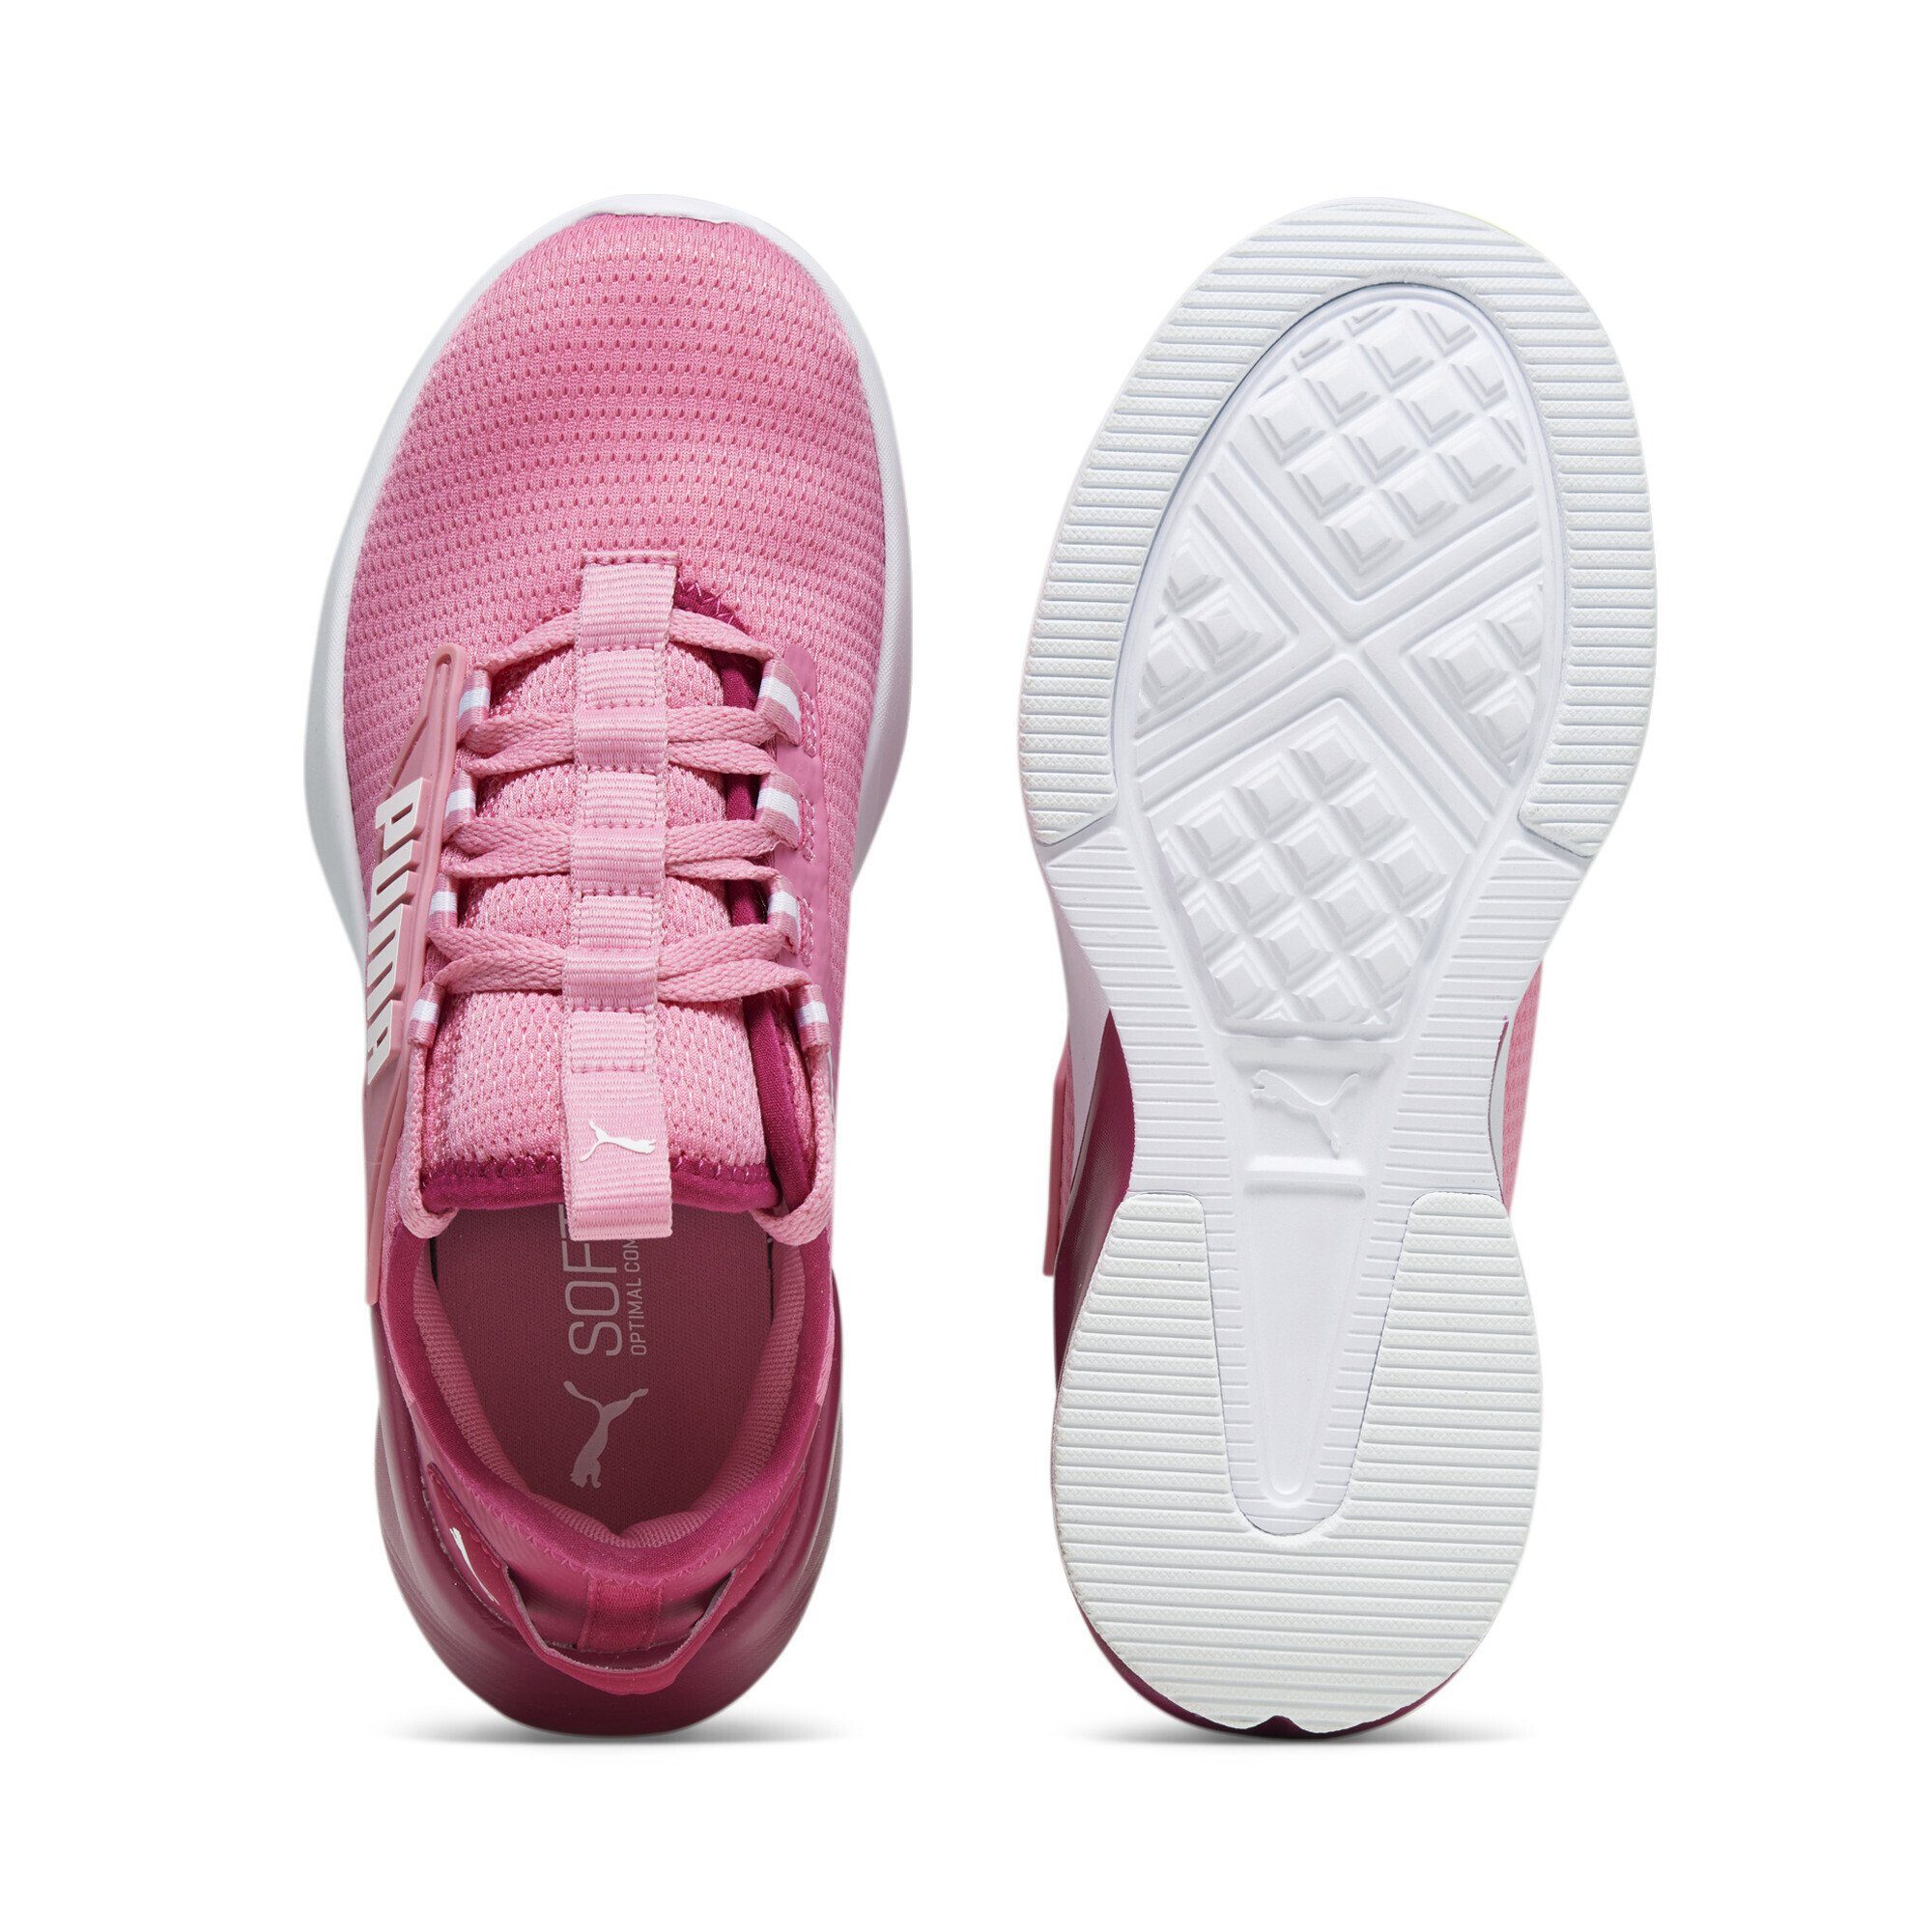 PUMA Retaliate 2 Sneakers Jugendliche Pinktastic White Burst Pink Laufschuh Strawberry